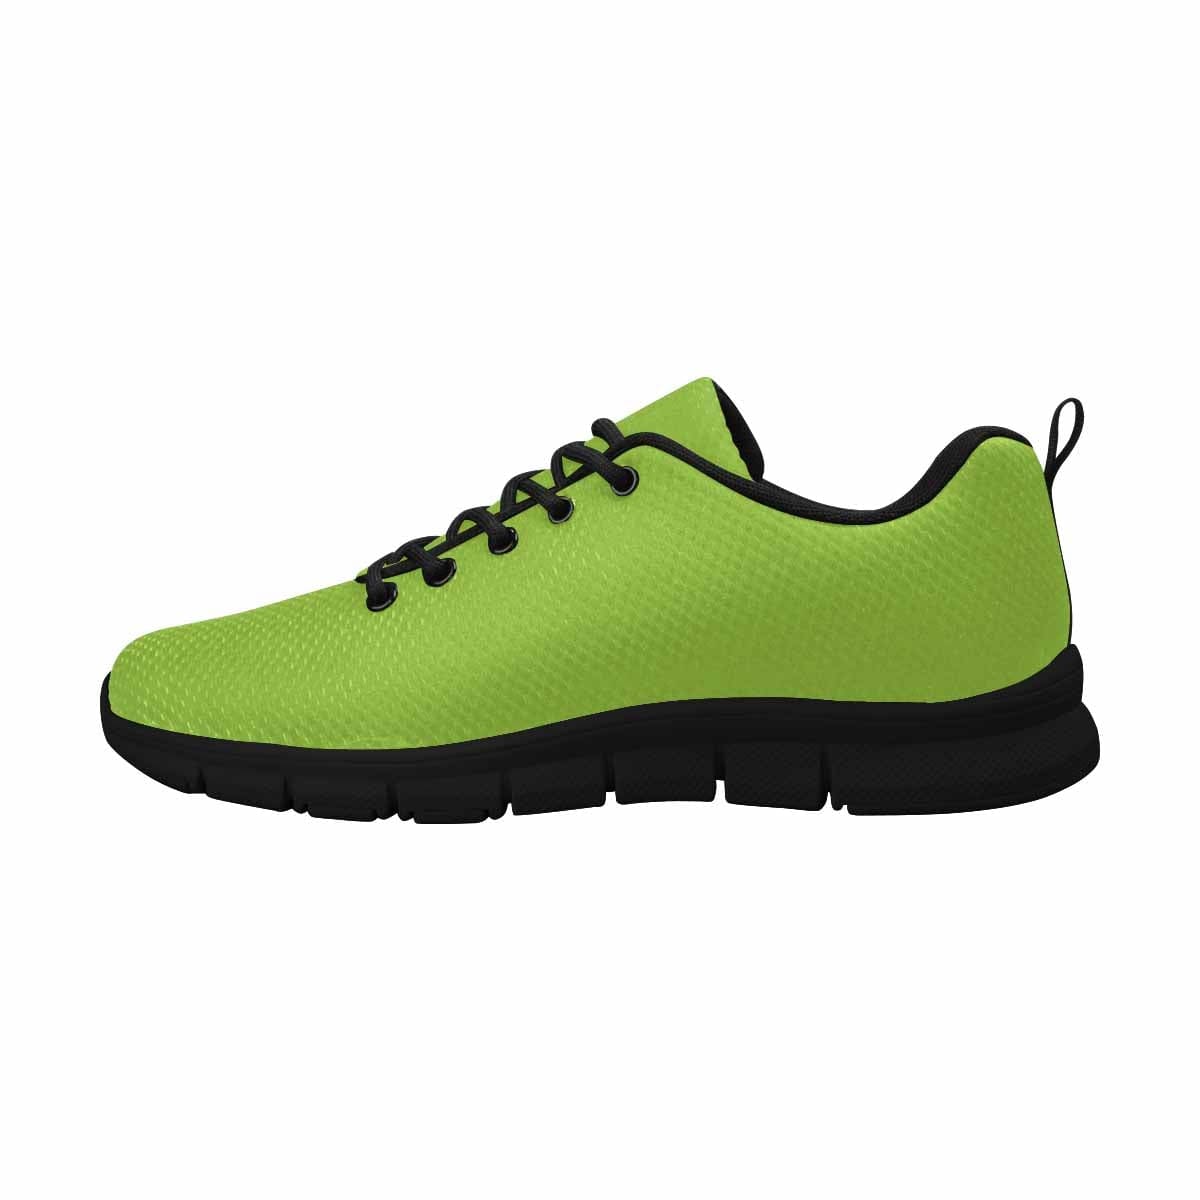 Sneakers For Women Yellow Green - Womens | Sneakers | Running